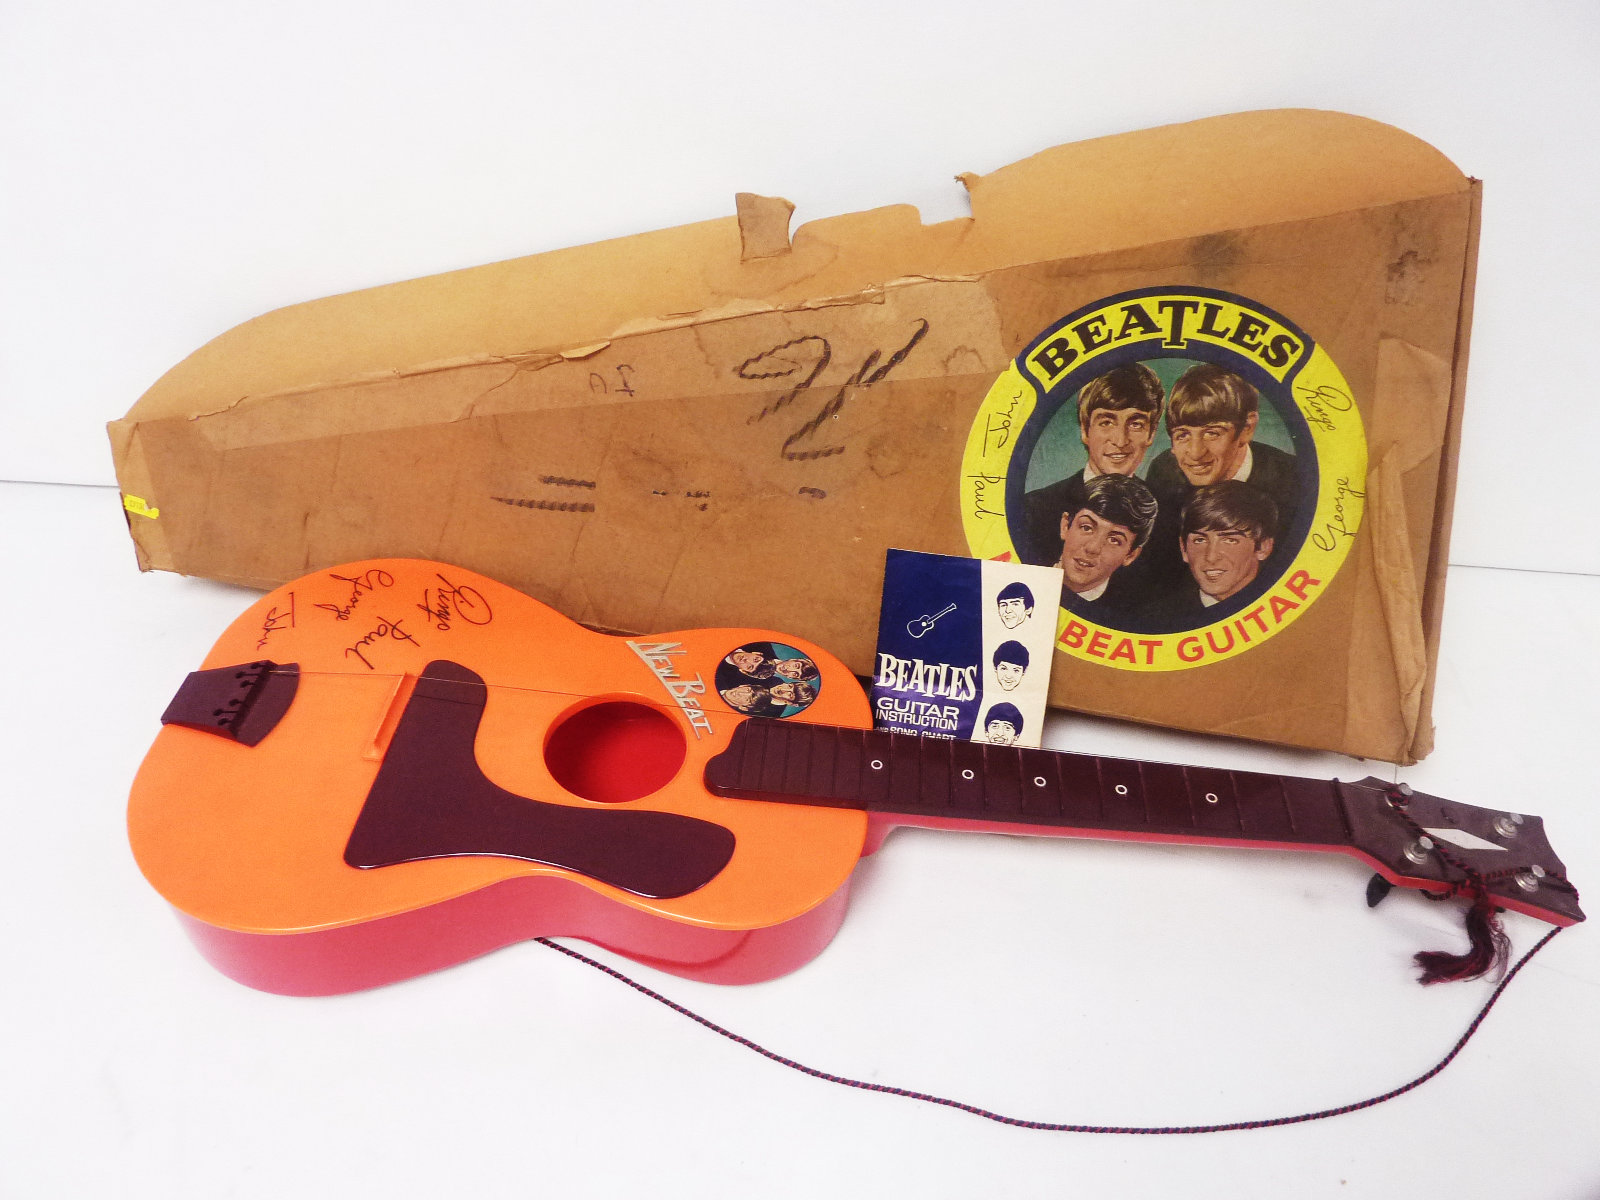 The Beatles - Selcol "New Beat" guitar in original box and song sheet.